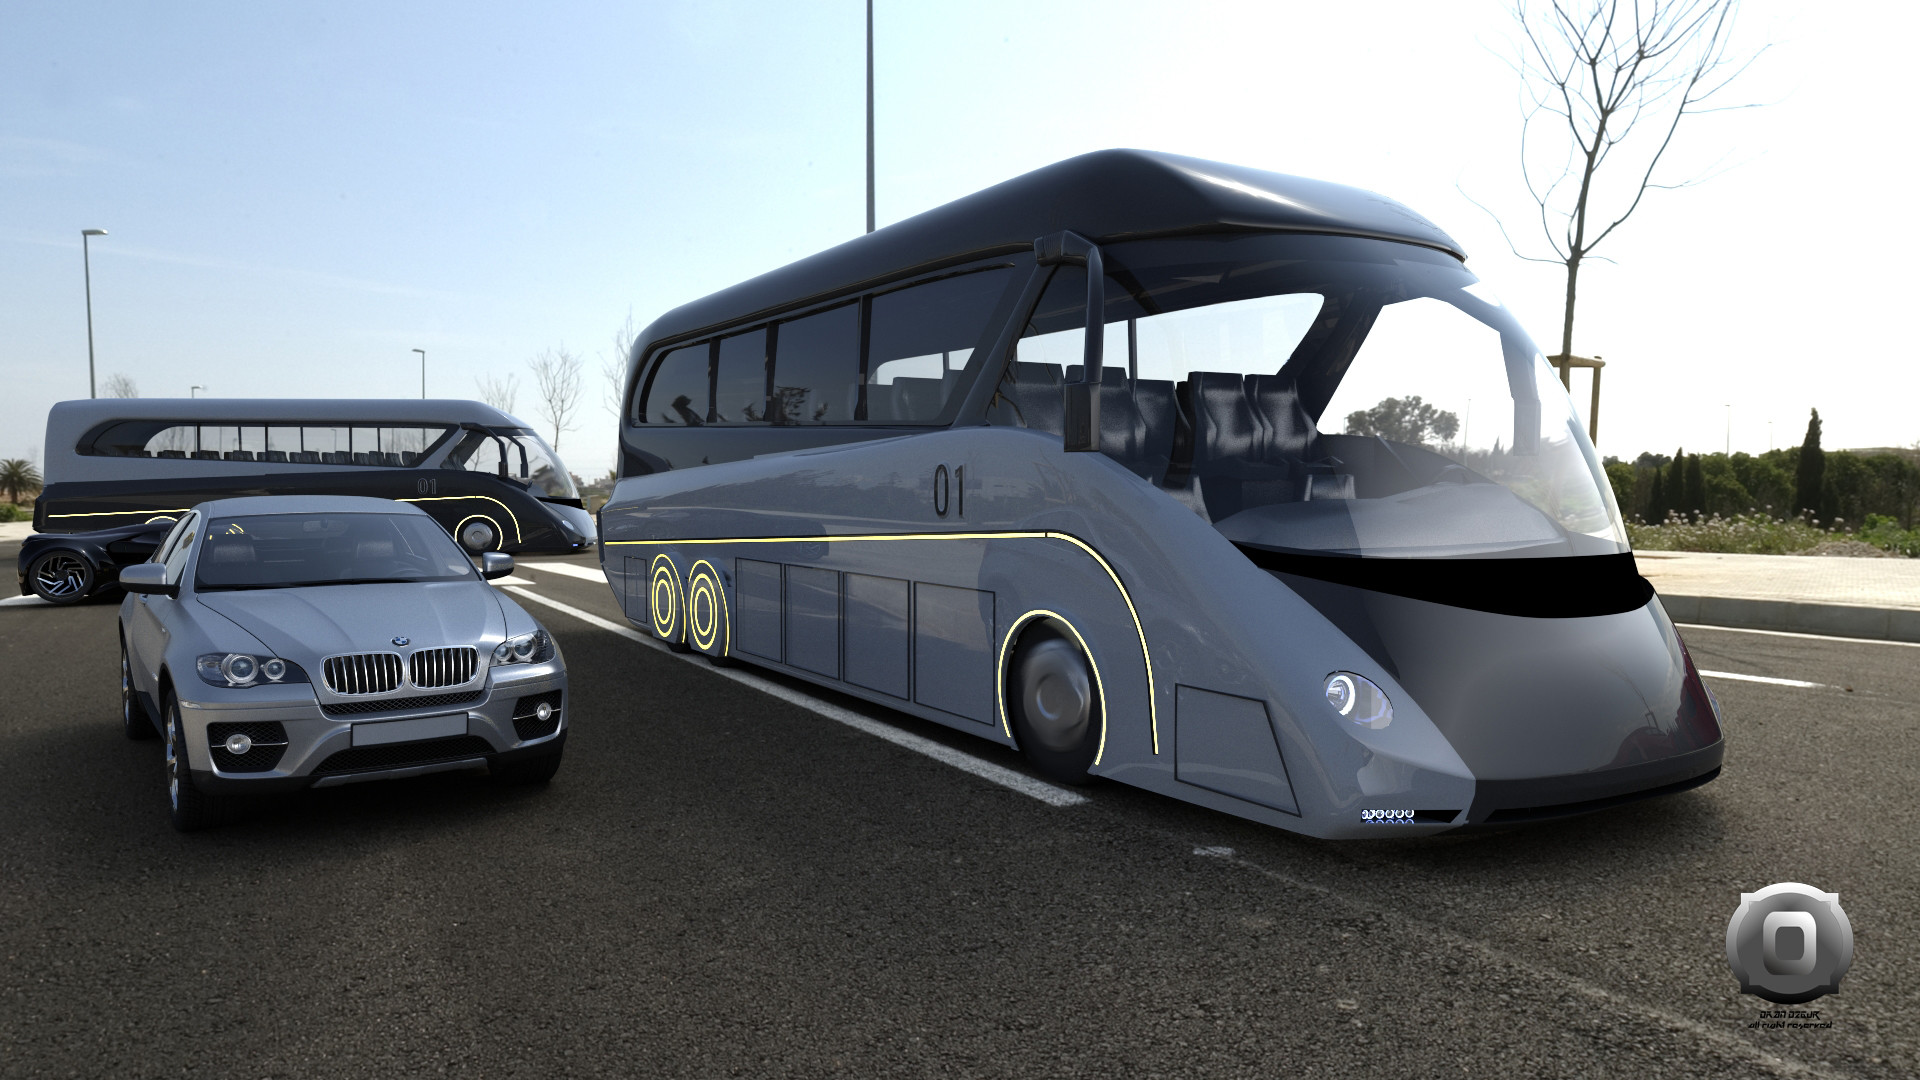 Mercedes 2025. Мерседес Бенц Туризмо автобус. Электроавтобус концепт BMW. Японский электробус 2020г Mazda. Автобус Мерседес 2025.